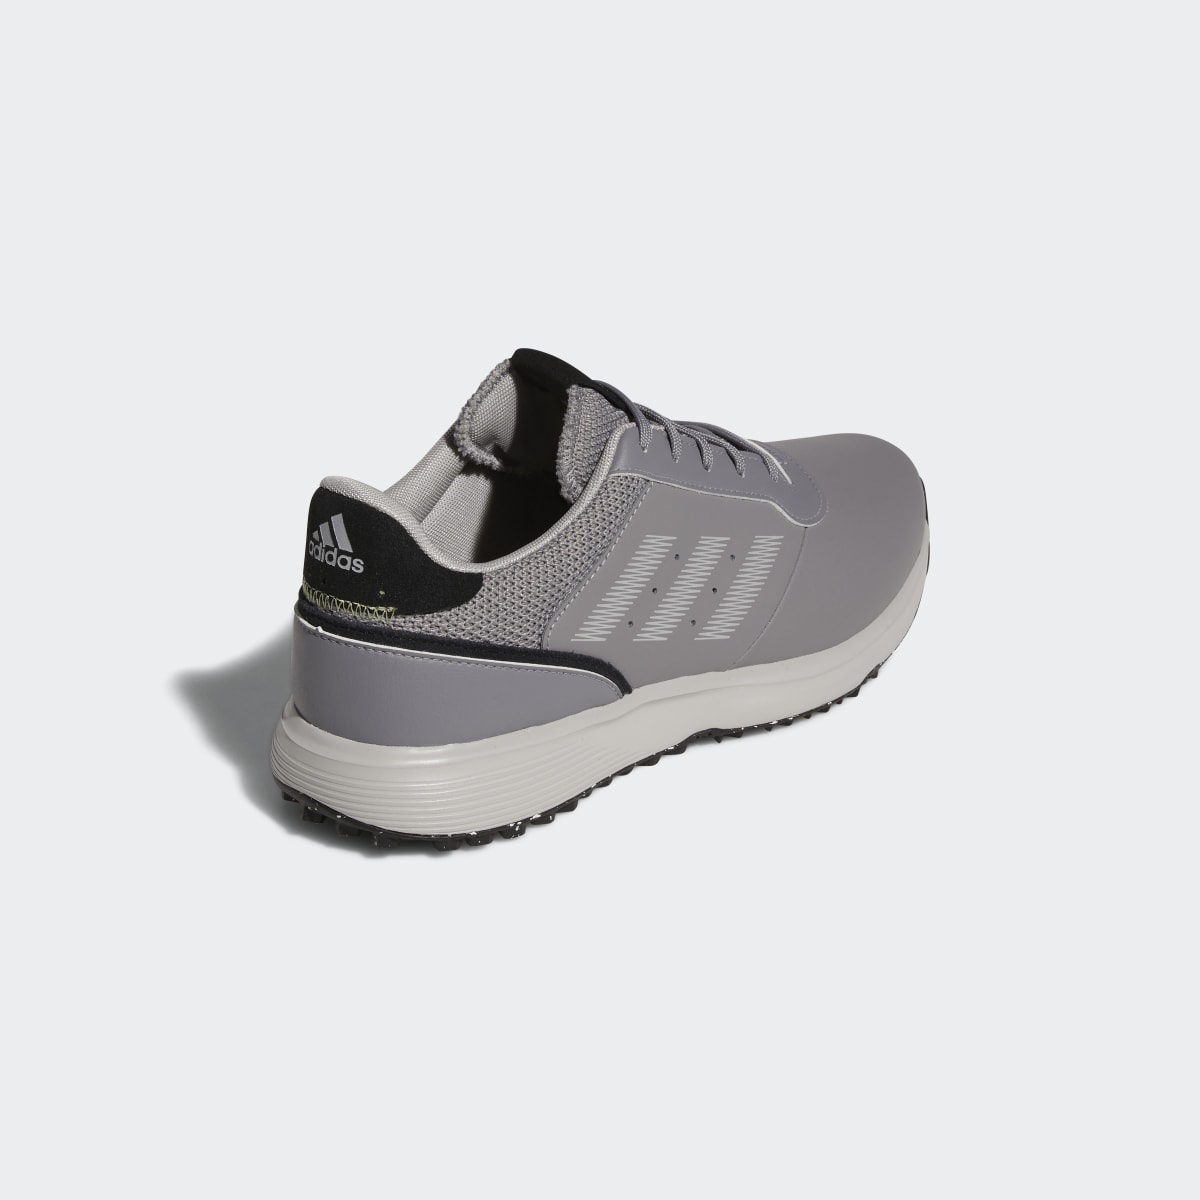 Adidas Chaussure de golf S2G sans crampons Leather. 6